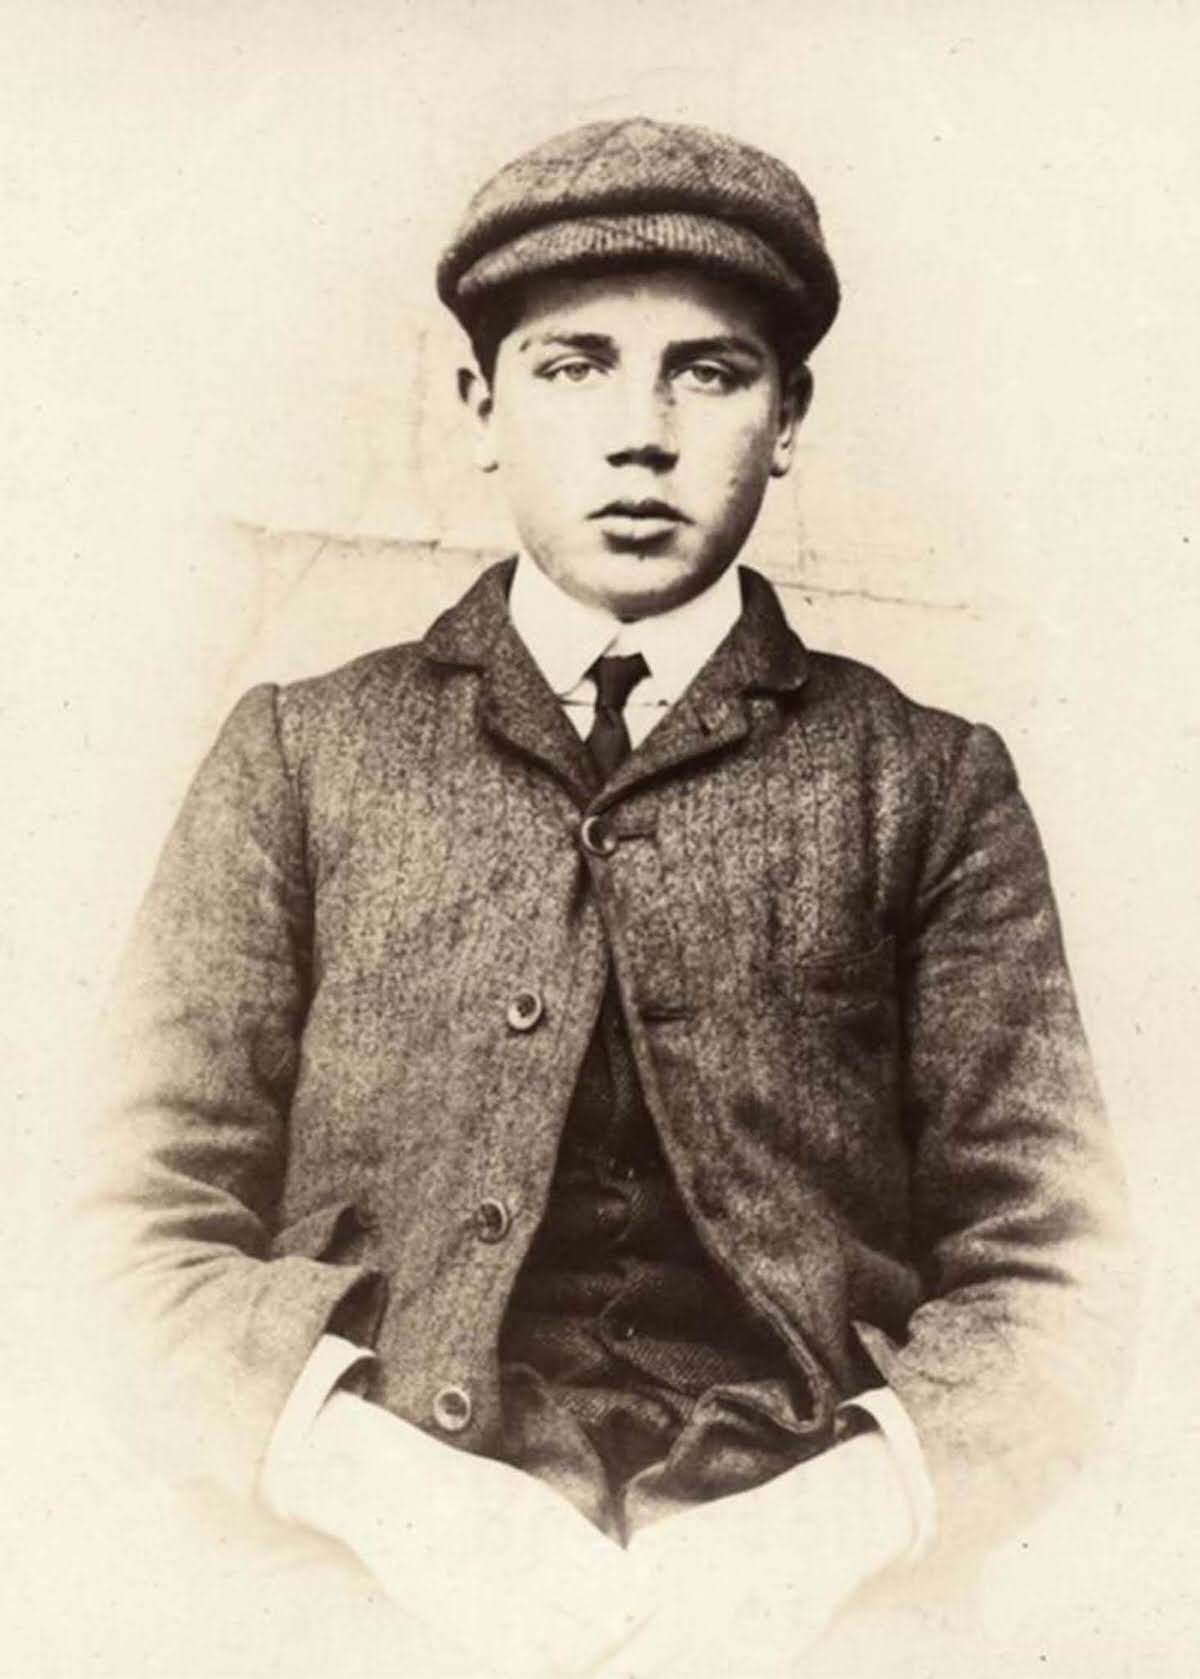 George Herbert Morton, 17, arrested for theft, 1906.